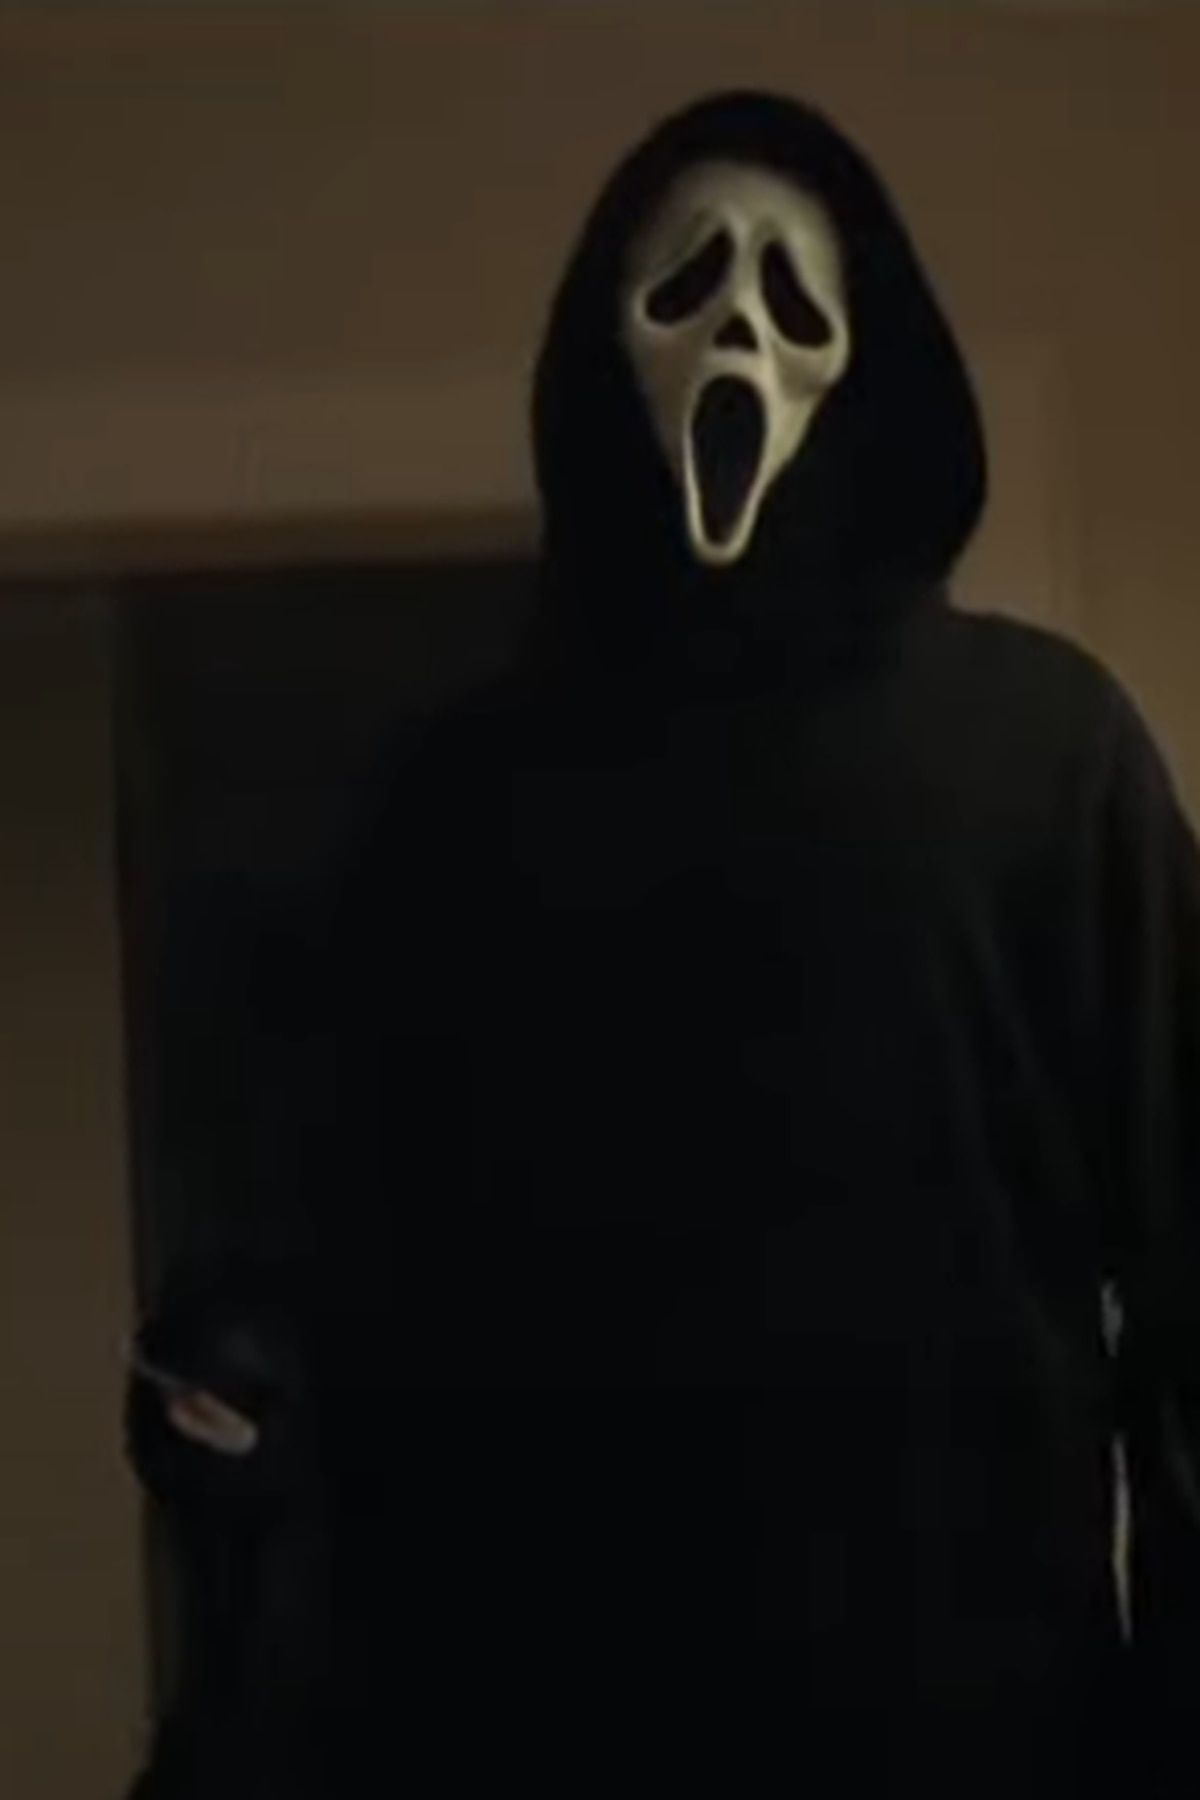 Ghostface holding a knife in the 2021 Scream movie - Ghostface